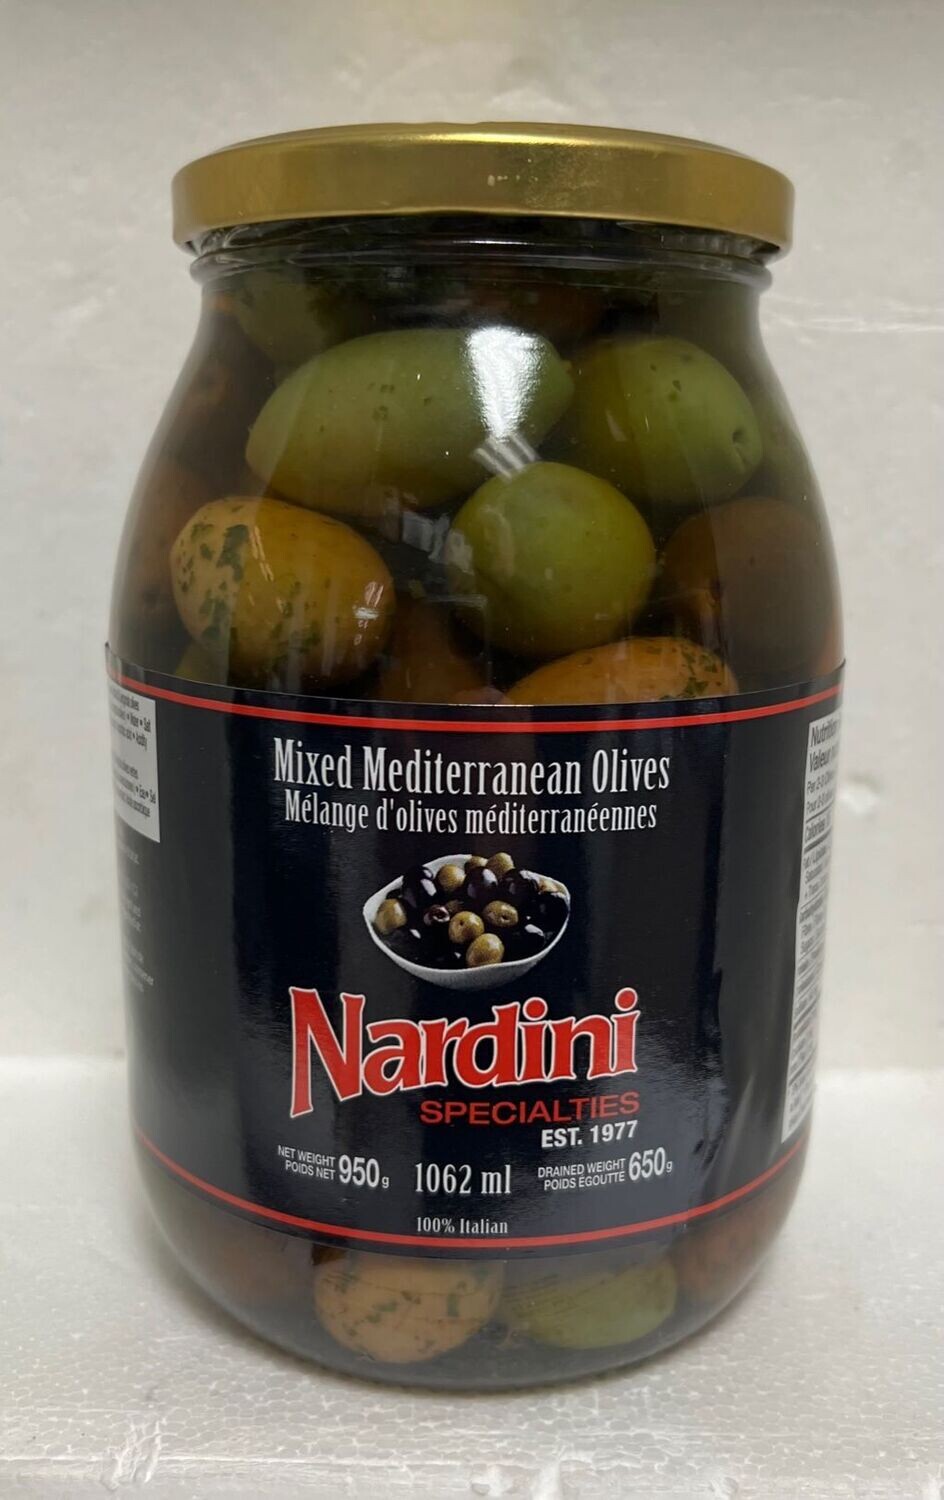 Mixed Mediterranean Olives - Nardini Private Label